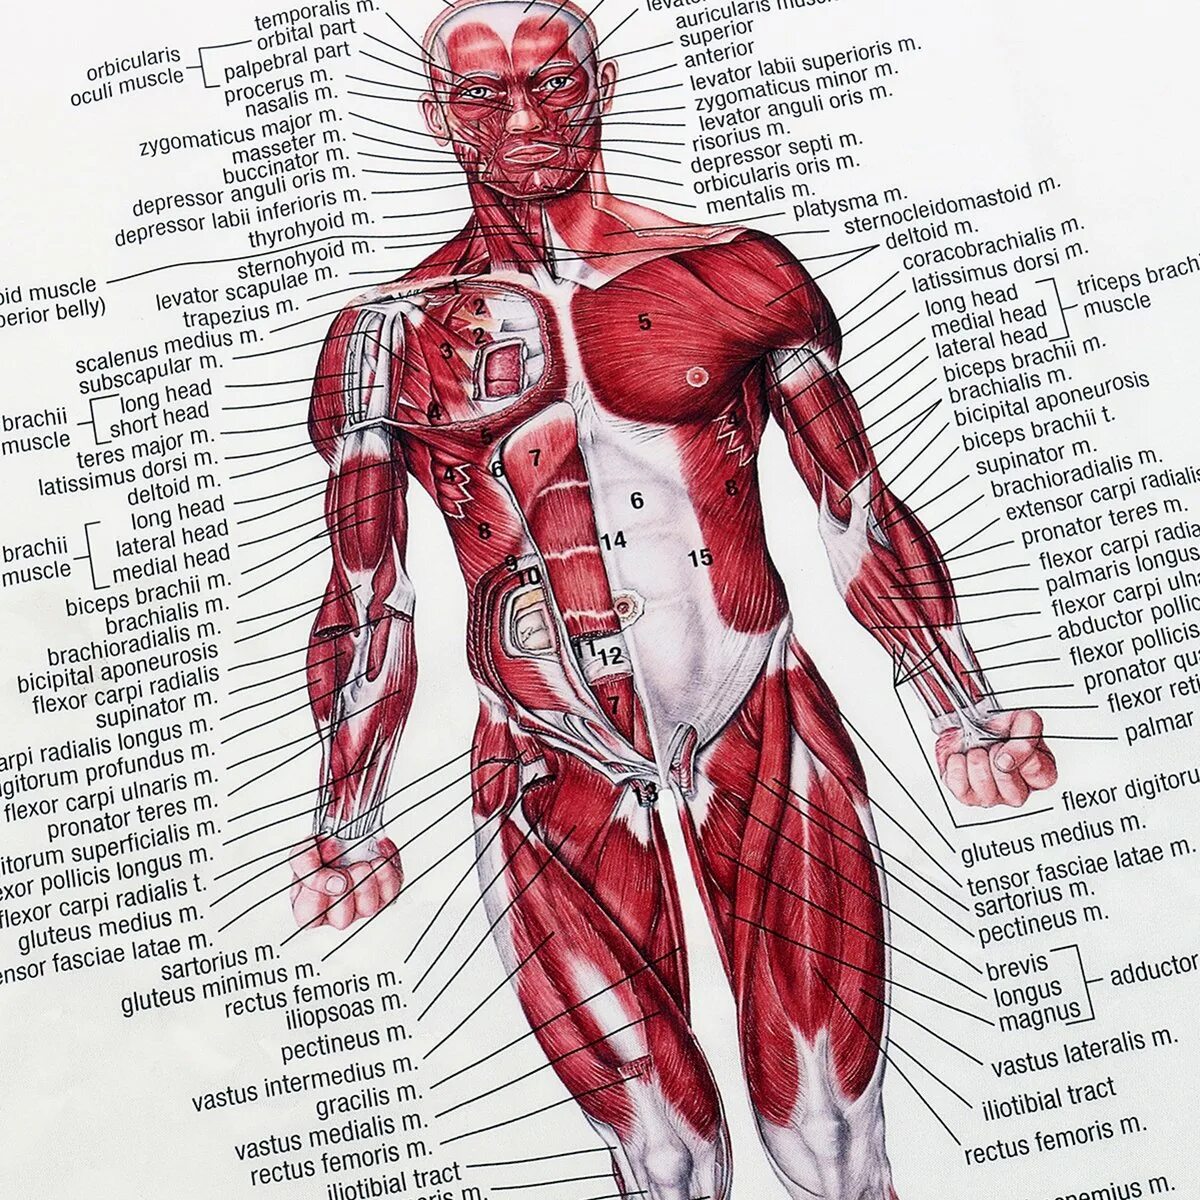 Мышечная система человека анатомия плакат. Атлас анатомия человека мышечная система. Анатомия человека атлас скелет и мышцы. Мышечная система человека атлас схема. Назовите мышцы человека